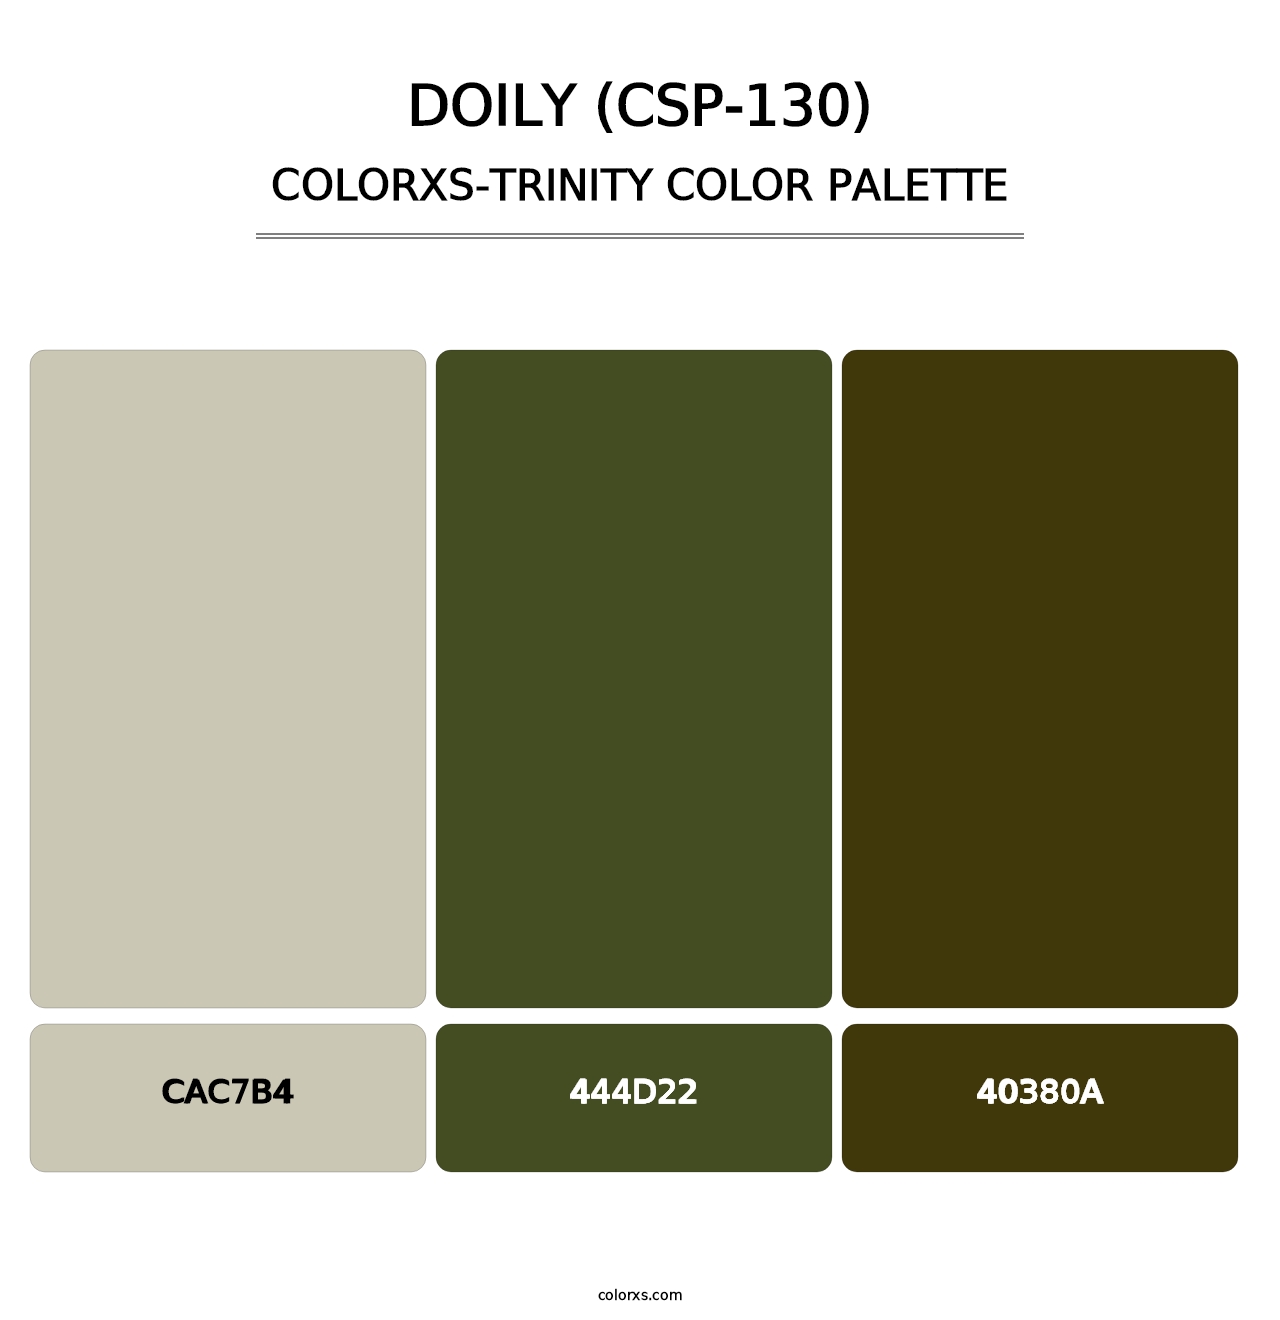 Doily (CSP-130) - Colorxs Trinity Palette